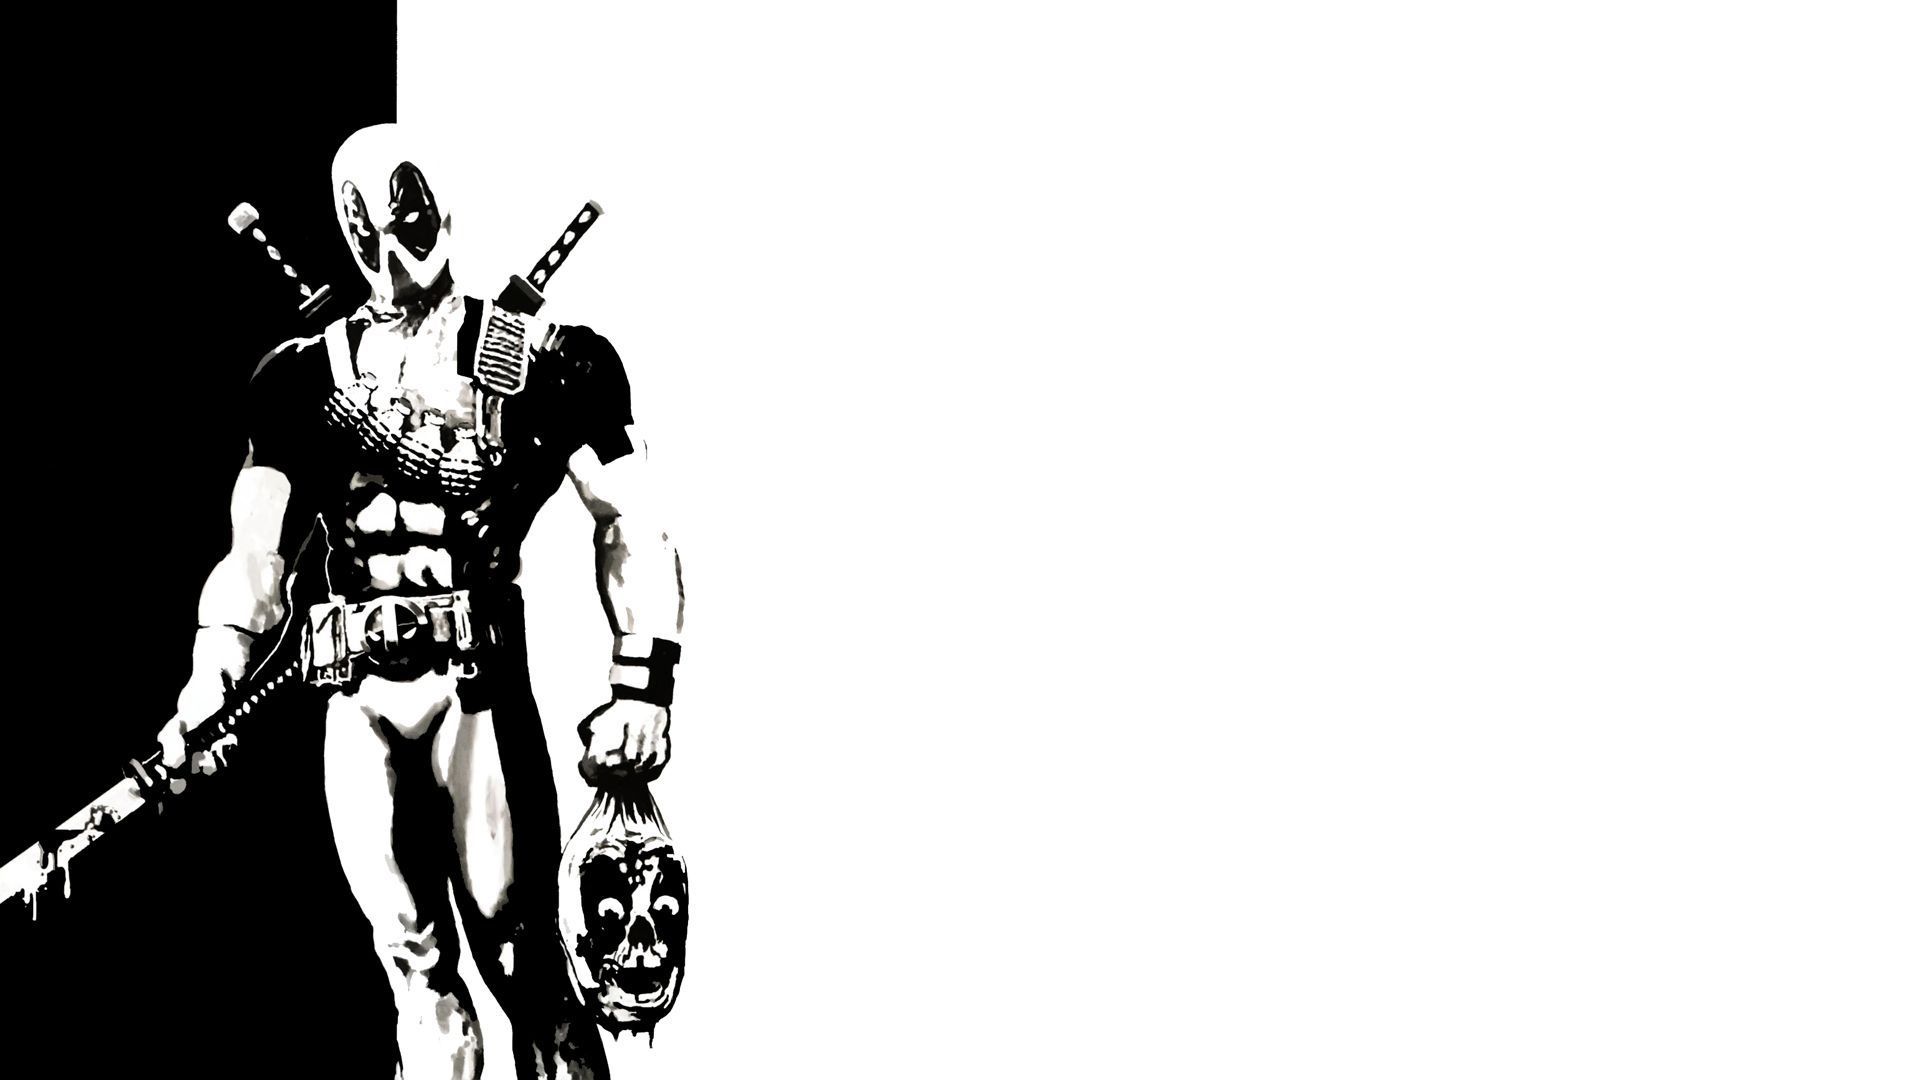 1080p Image: Deadpool Black HD Wallpaper Download